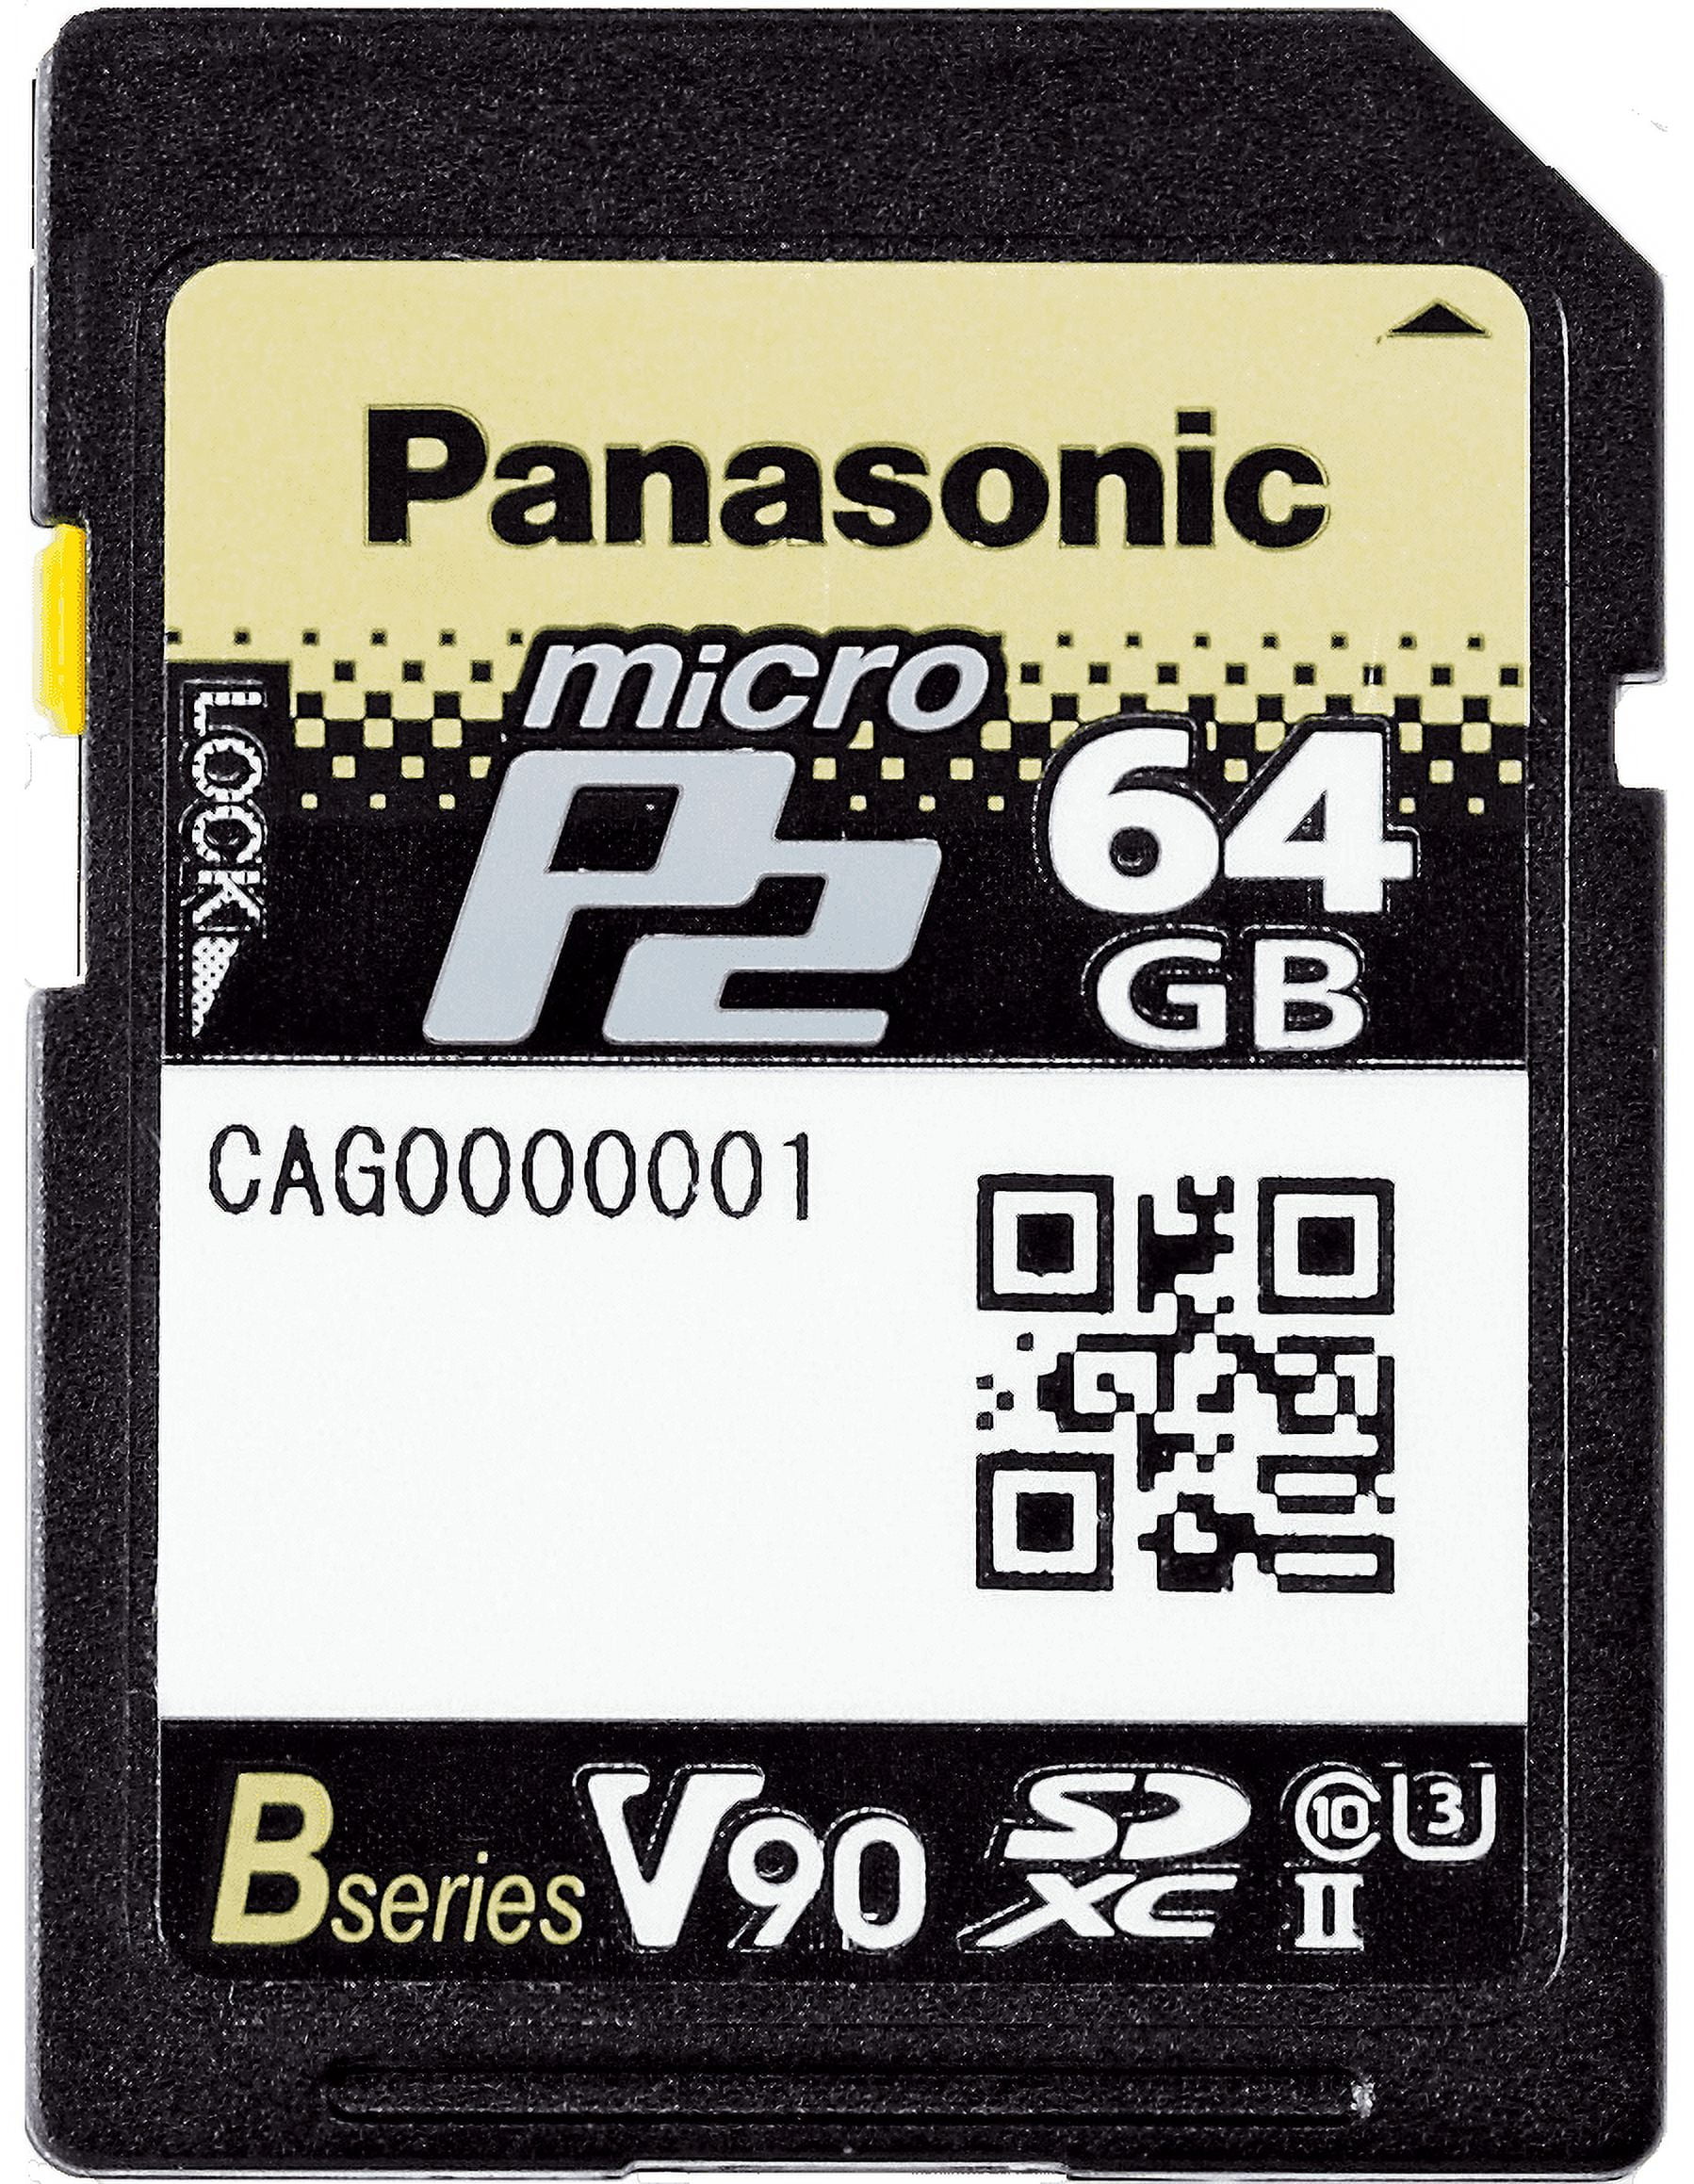 File:Panasonic P2 card 16GB 20081214.jpg - Wikipedia